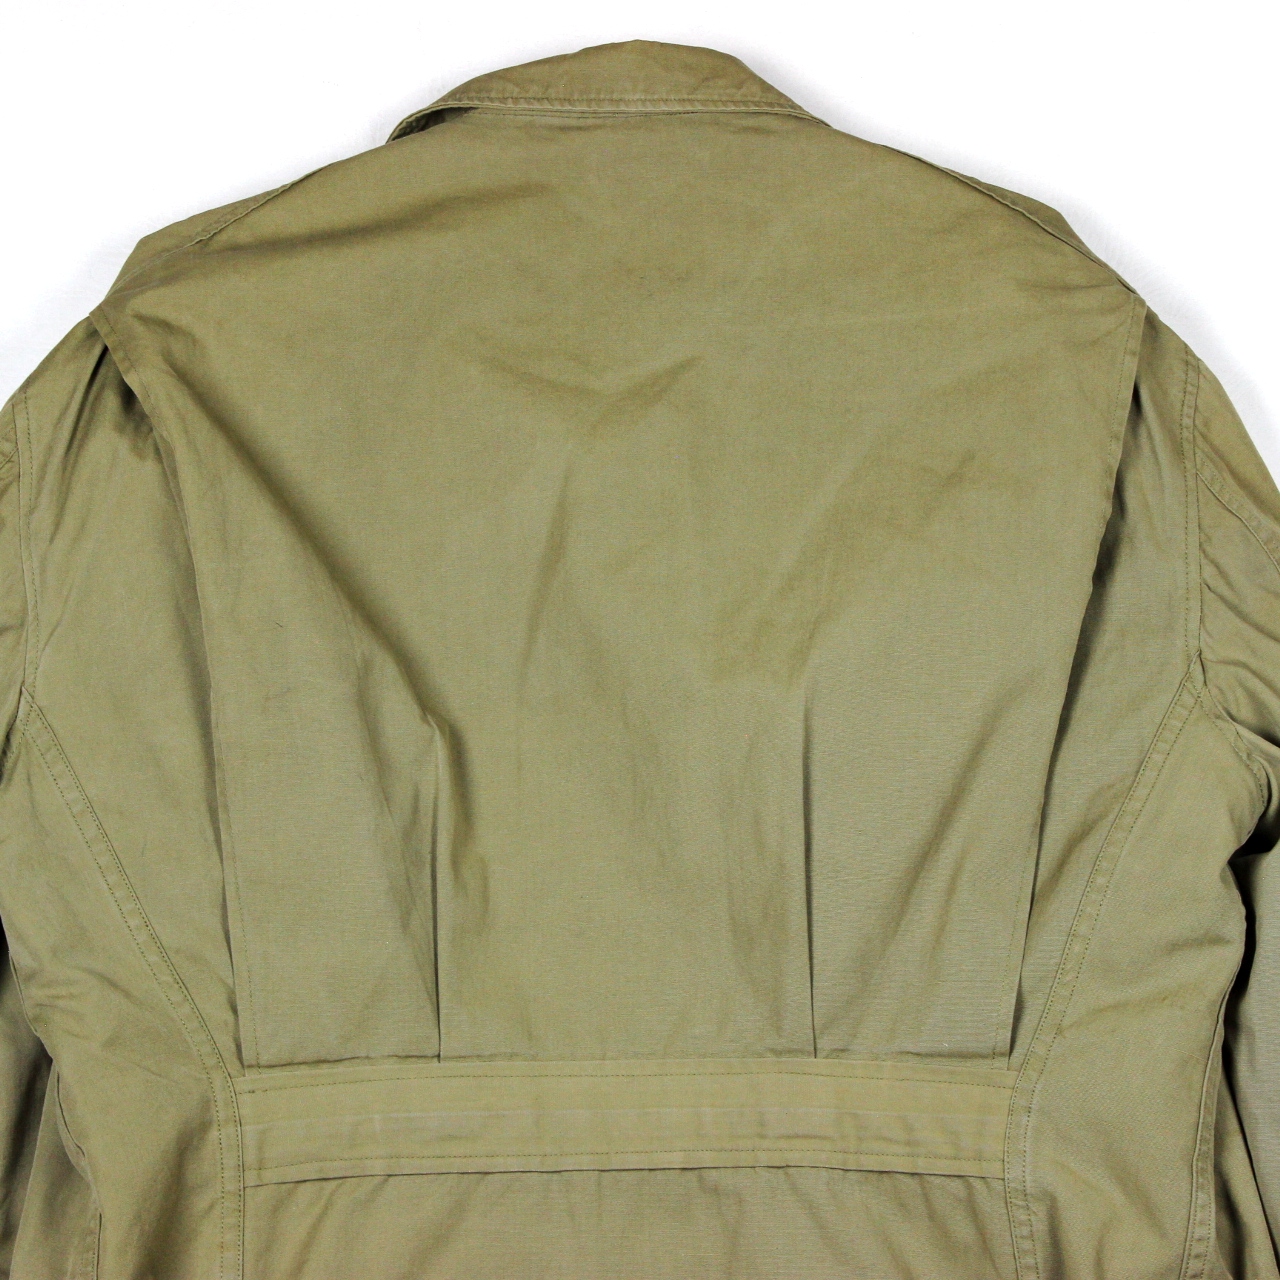 M1938 Parson's field jacket - Size 40R